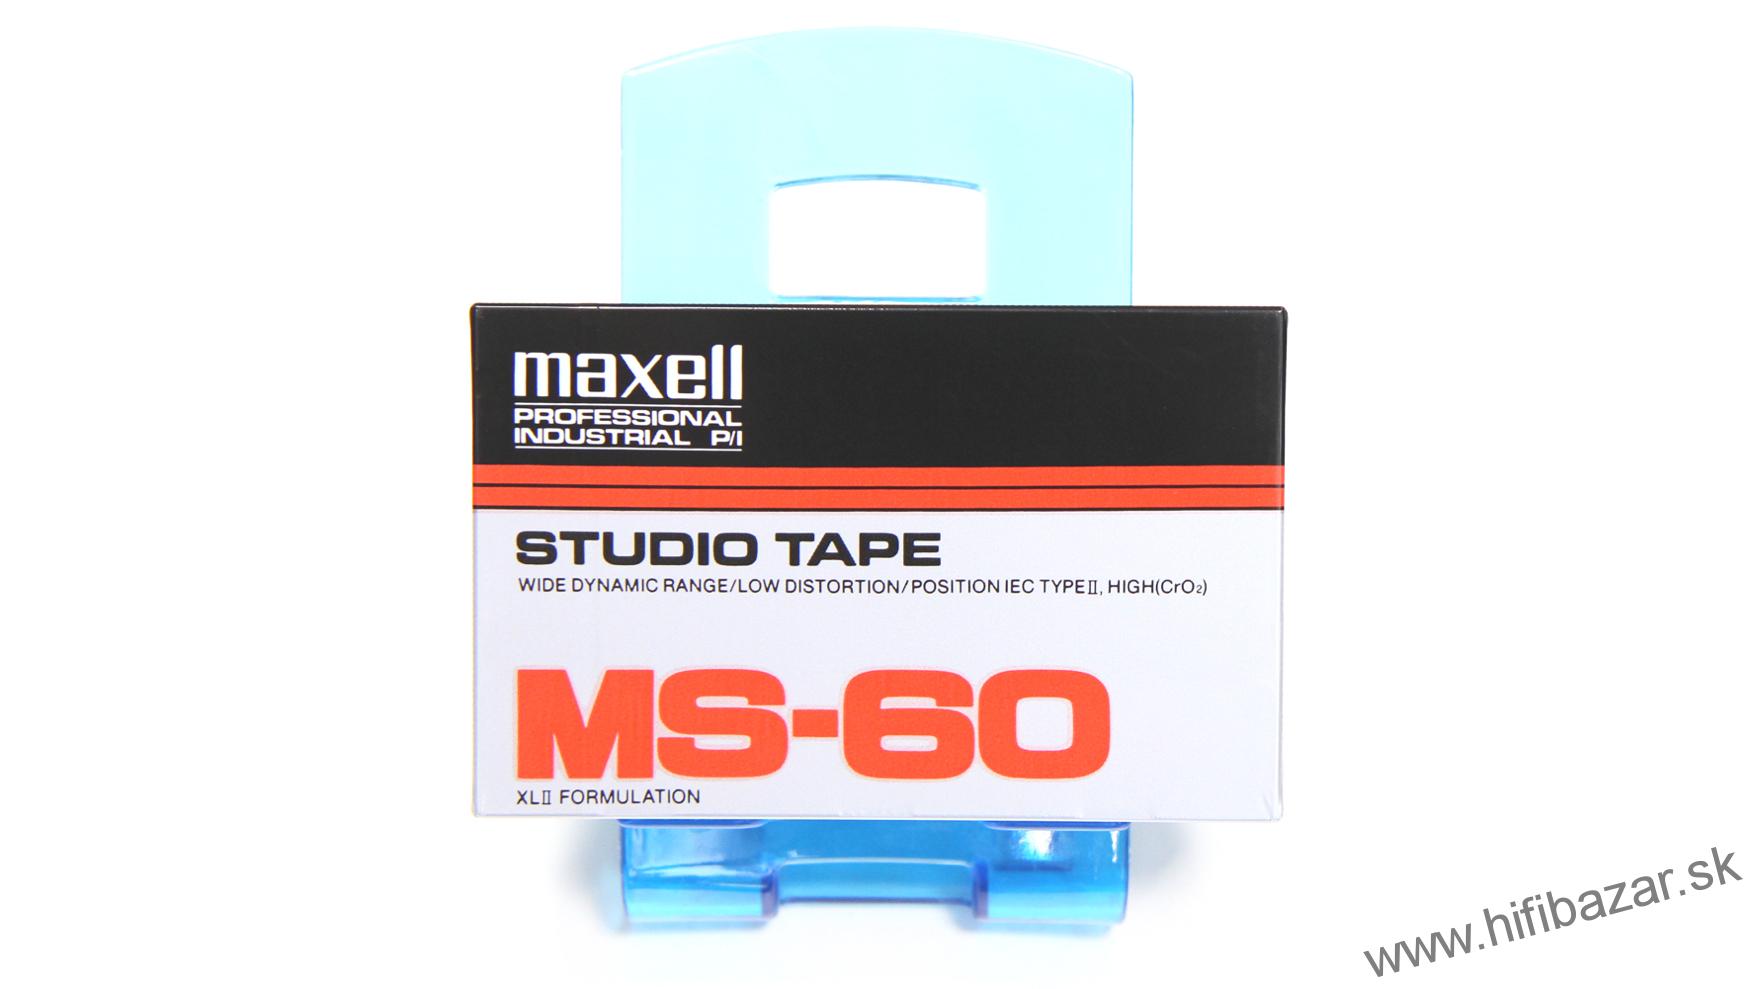 MAXELL MS-60 Studio Tape